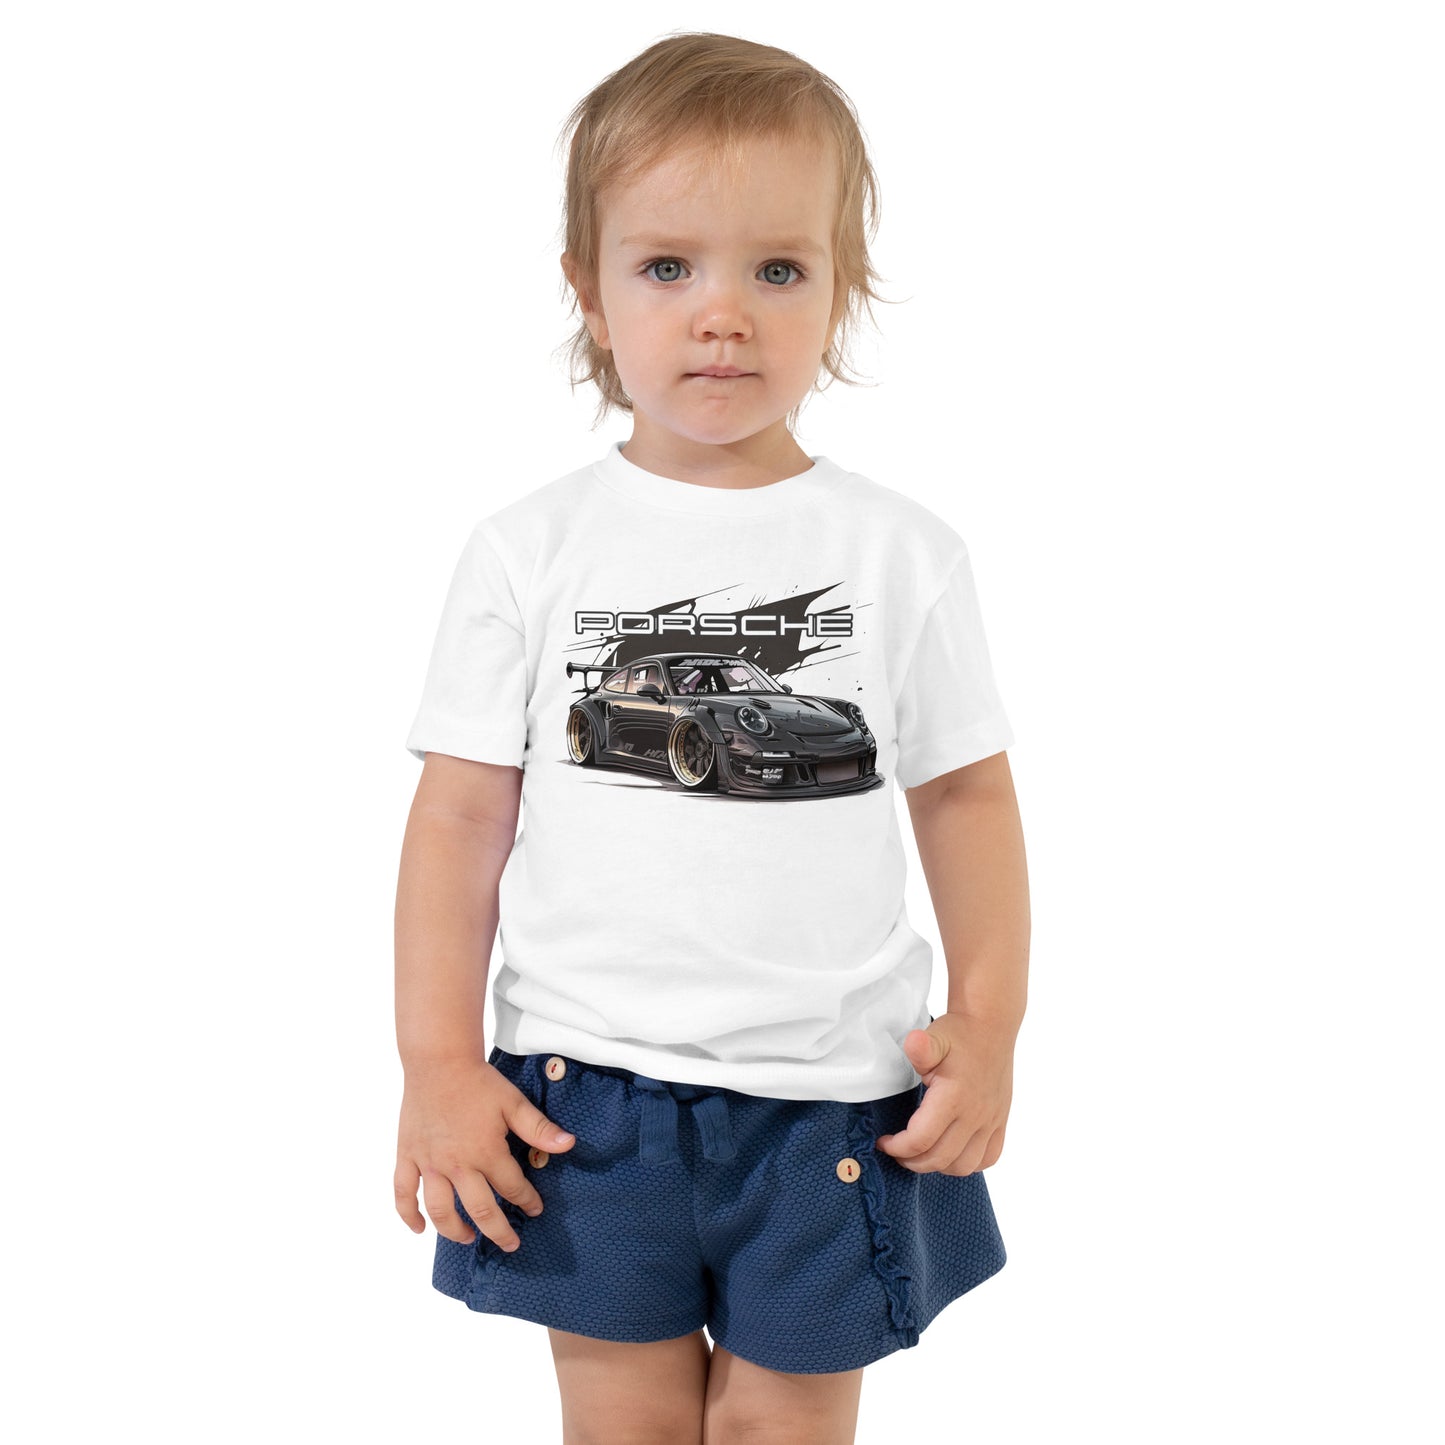 Porsche Toddler Short Sleeve Tee